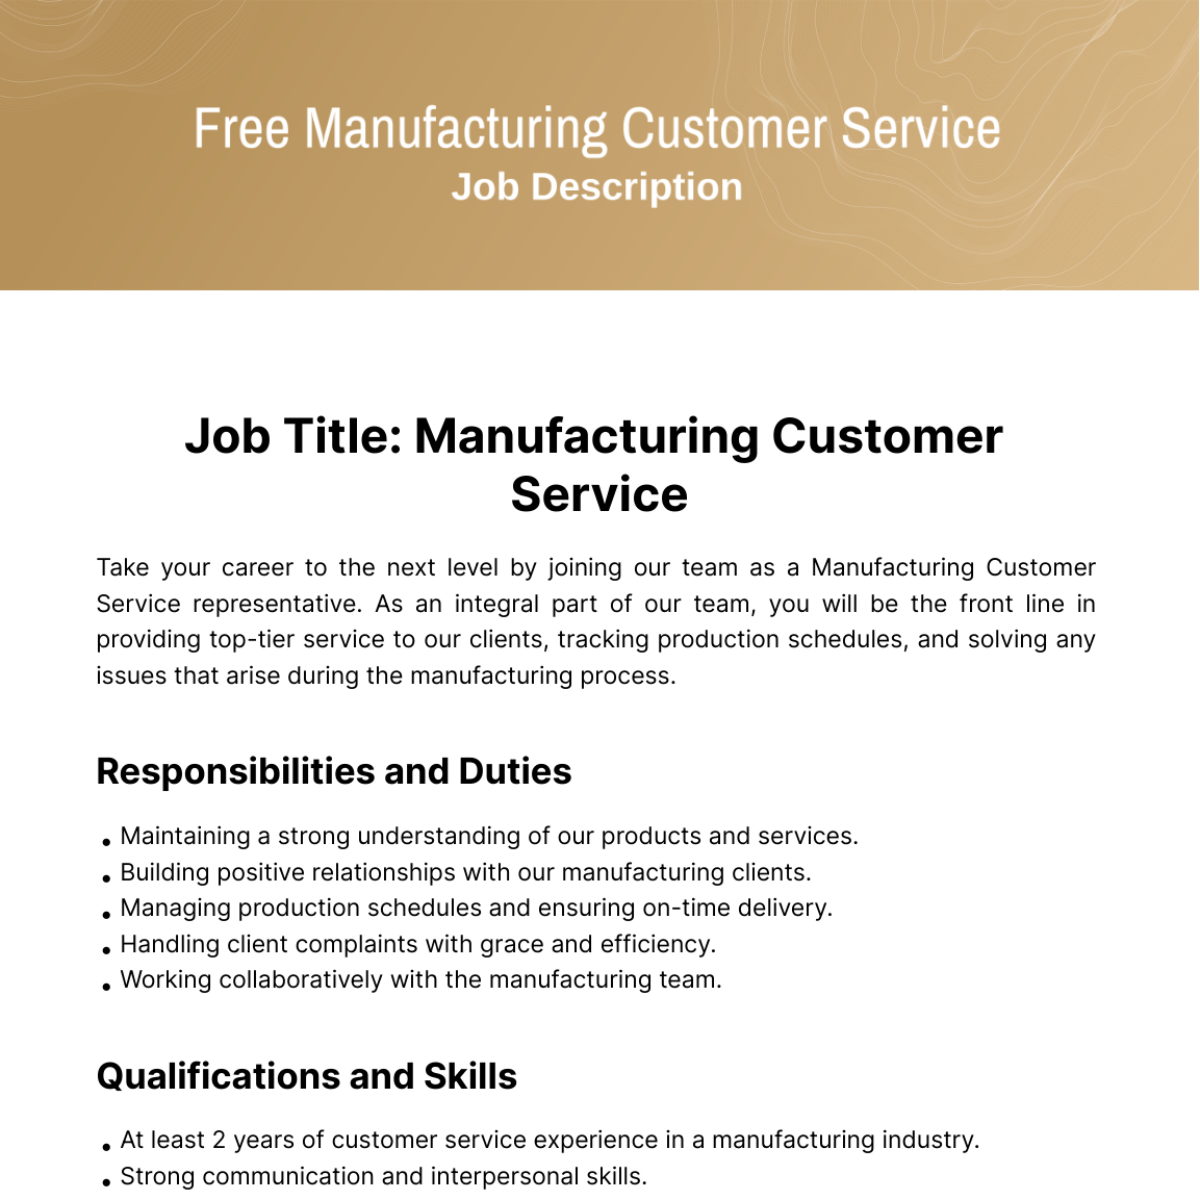 Free Manufacturing Customer Service Job Description Template